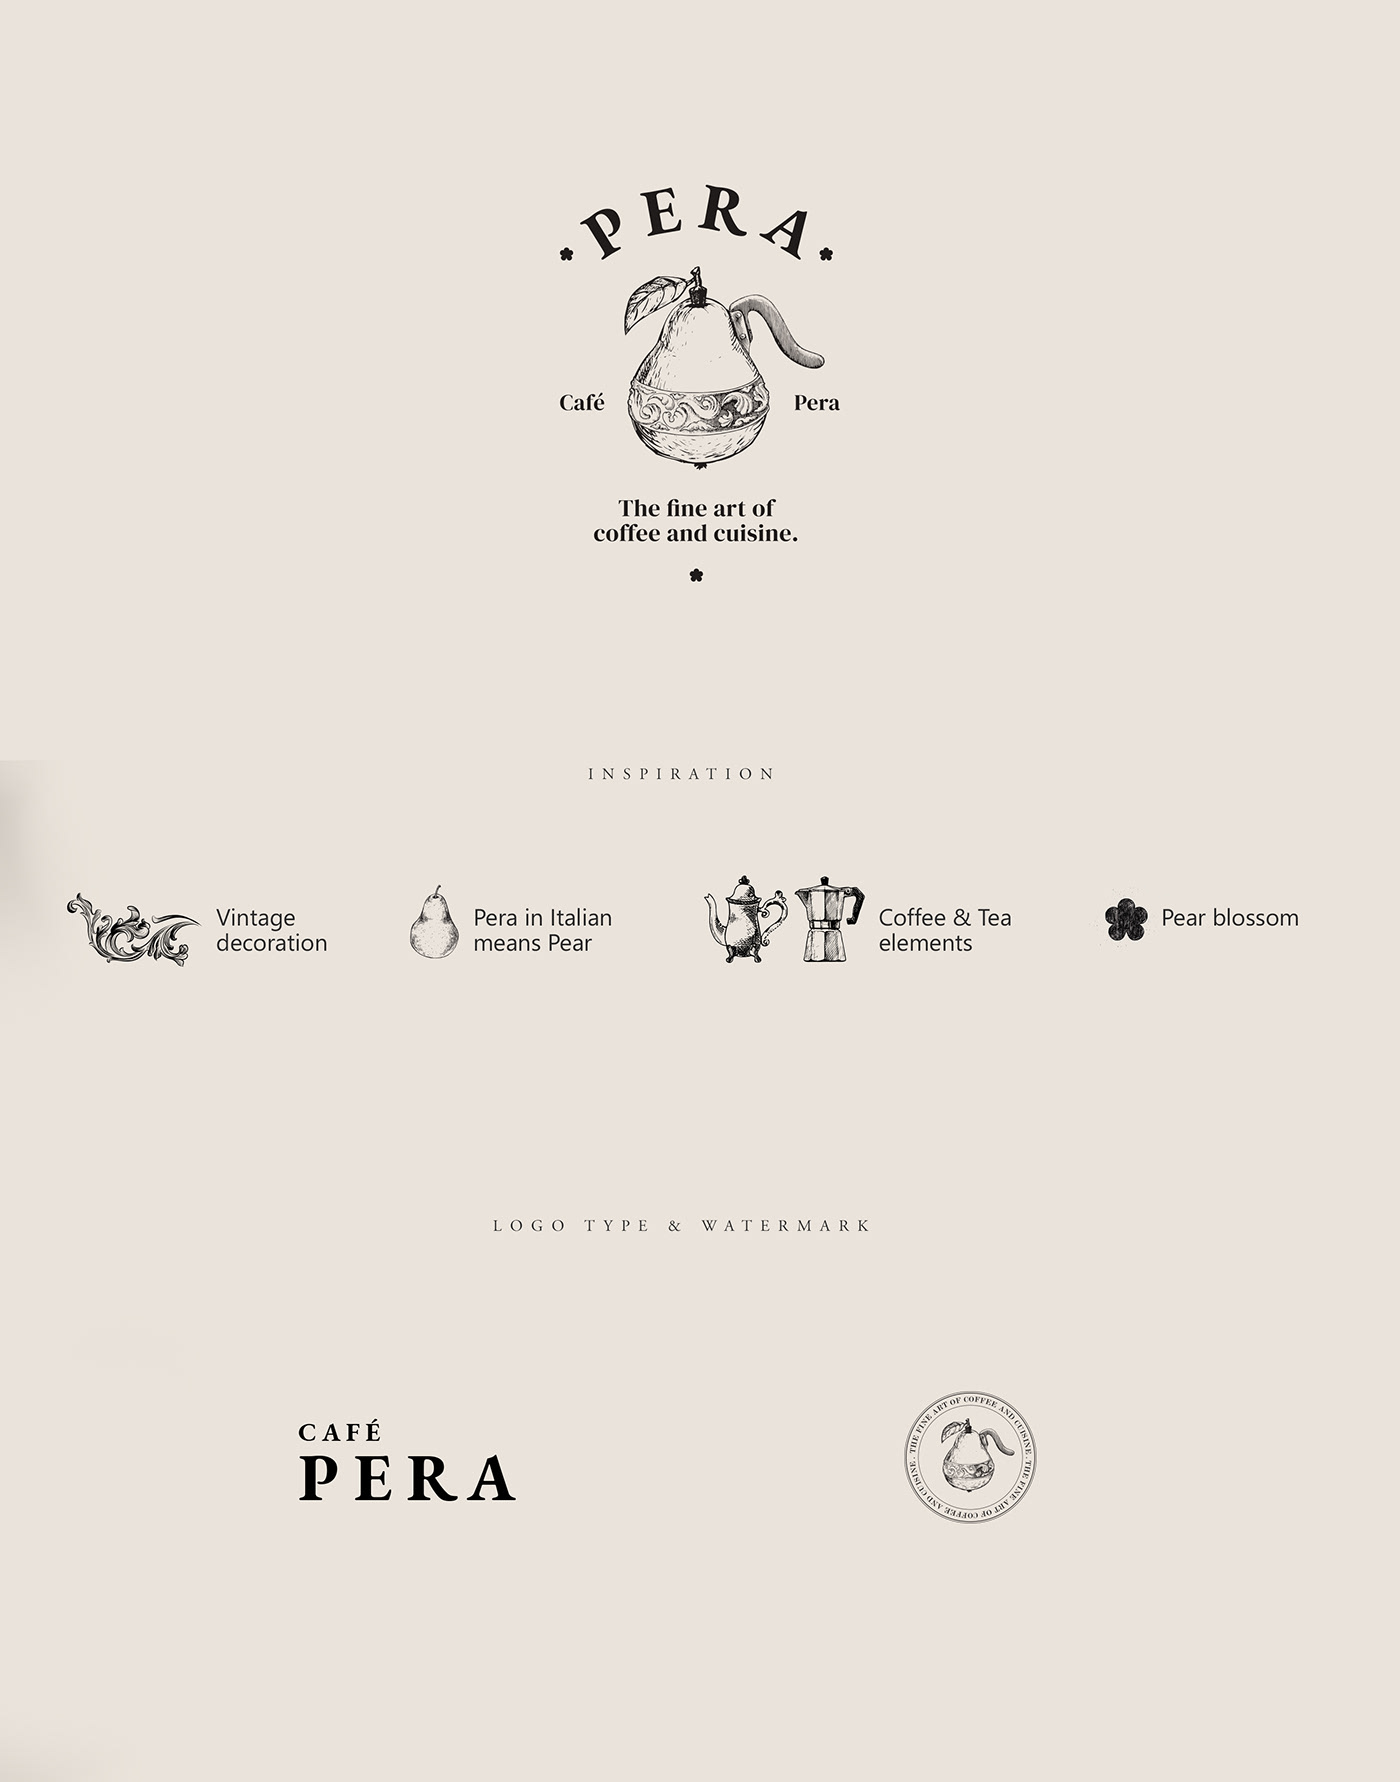 logos
logo design
fine art
pear
coffee
tea
visual identity
vintage
sketch
cuisine